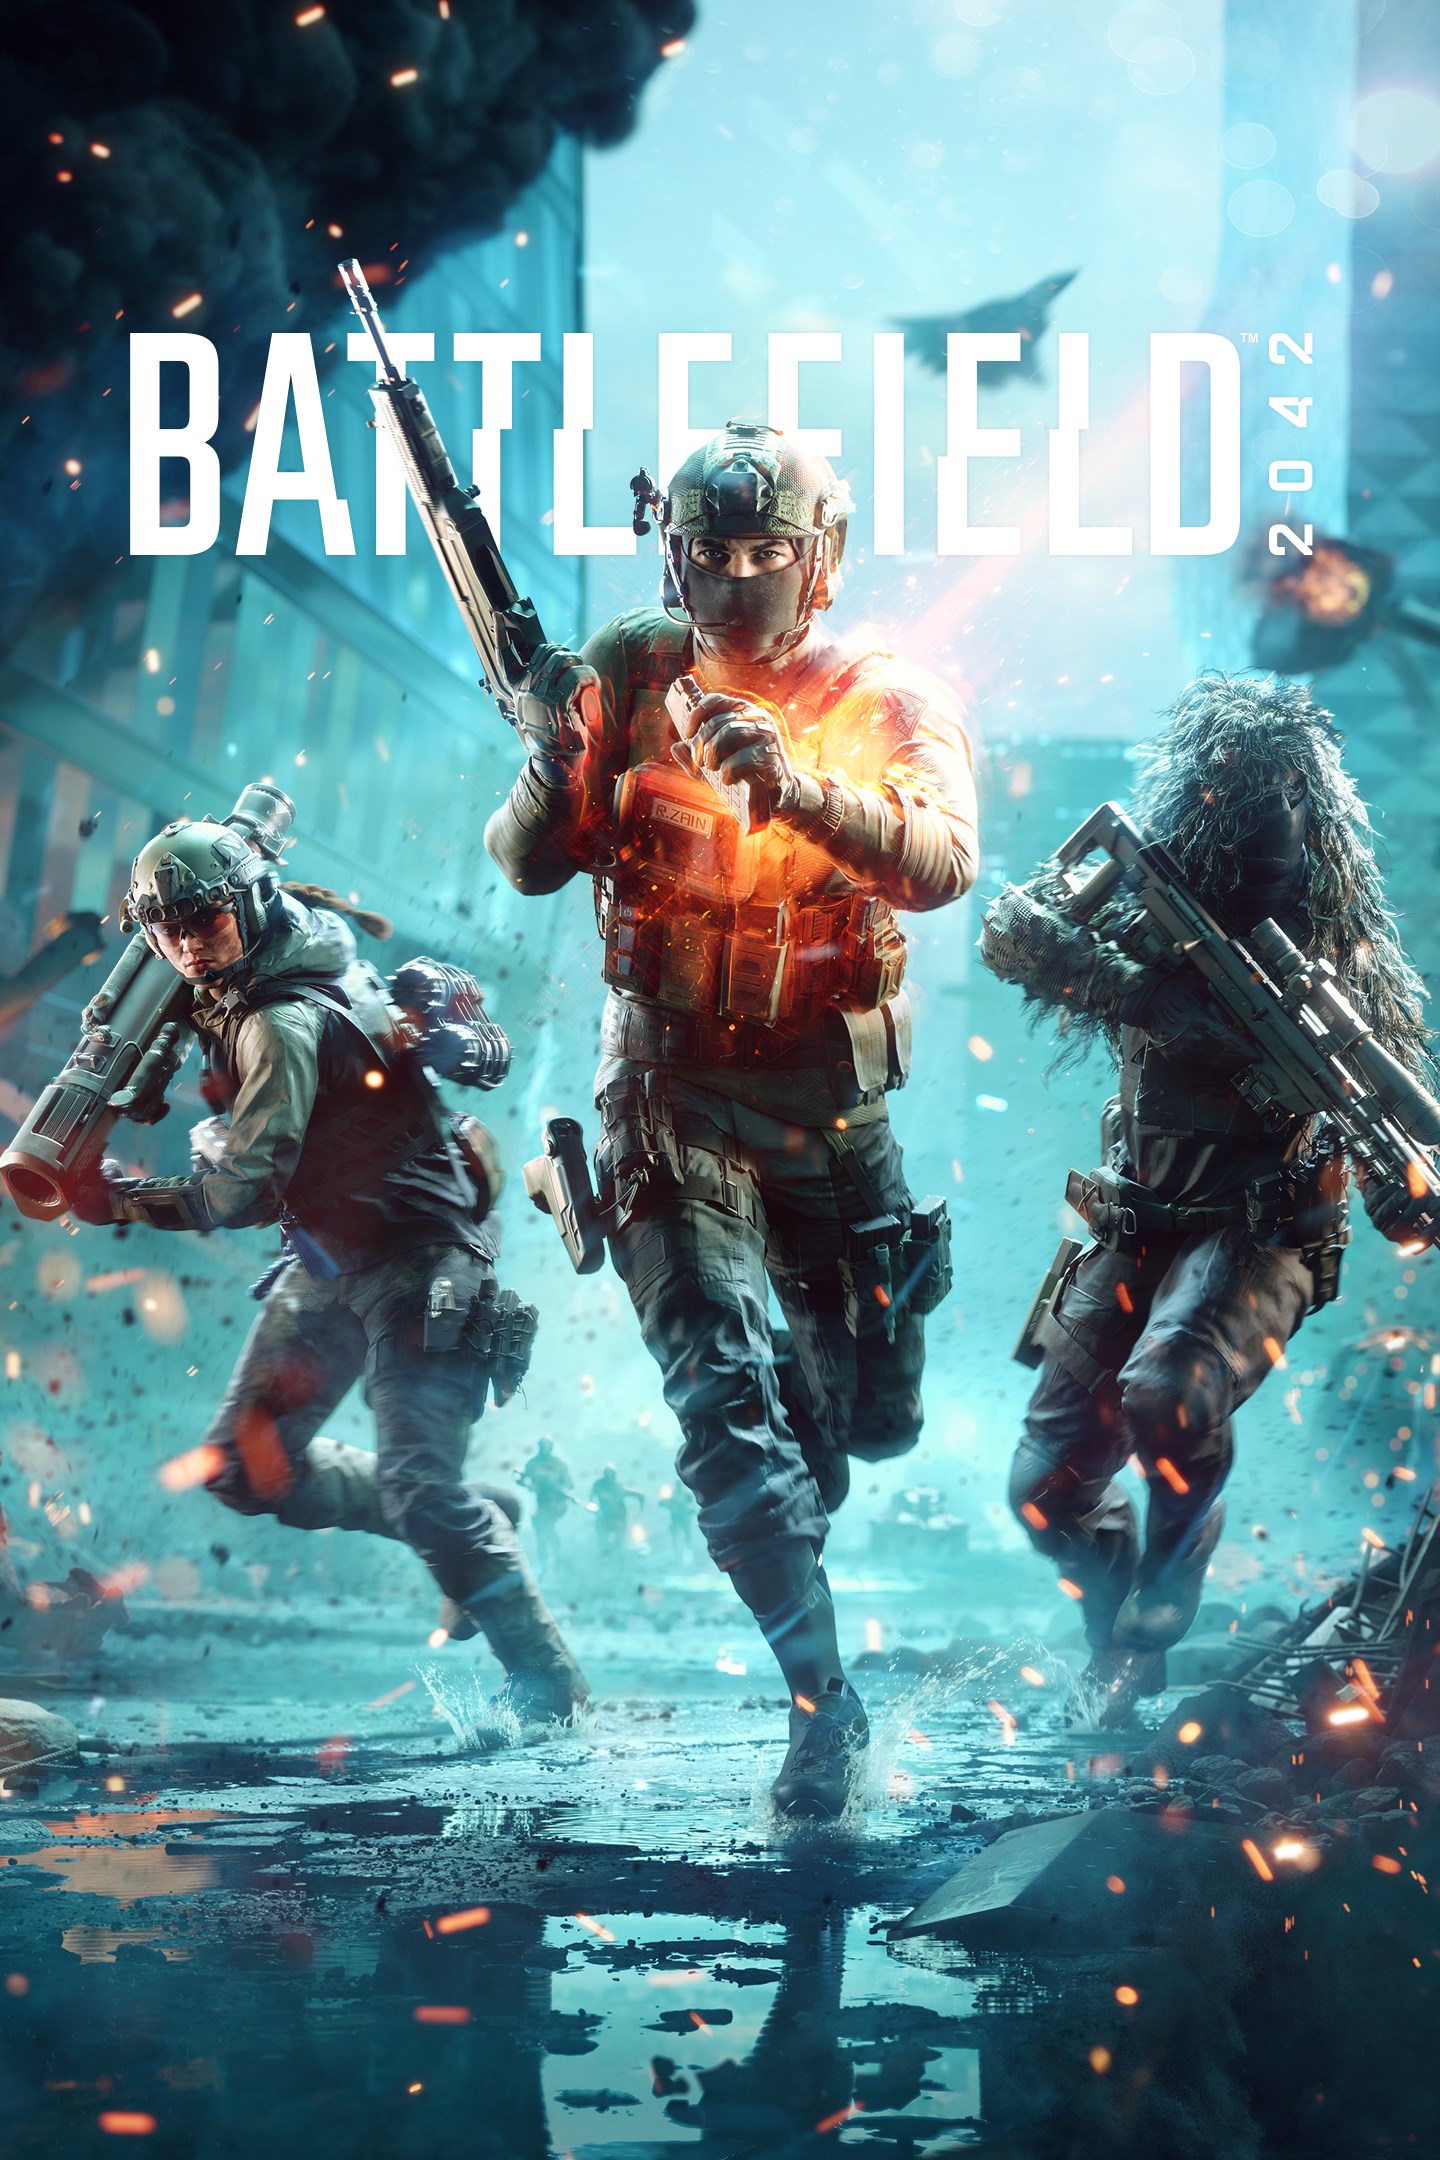 Will Battlefield 2042 Feature Crossplay? - Esports Talk